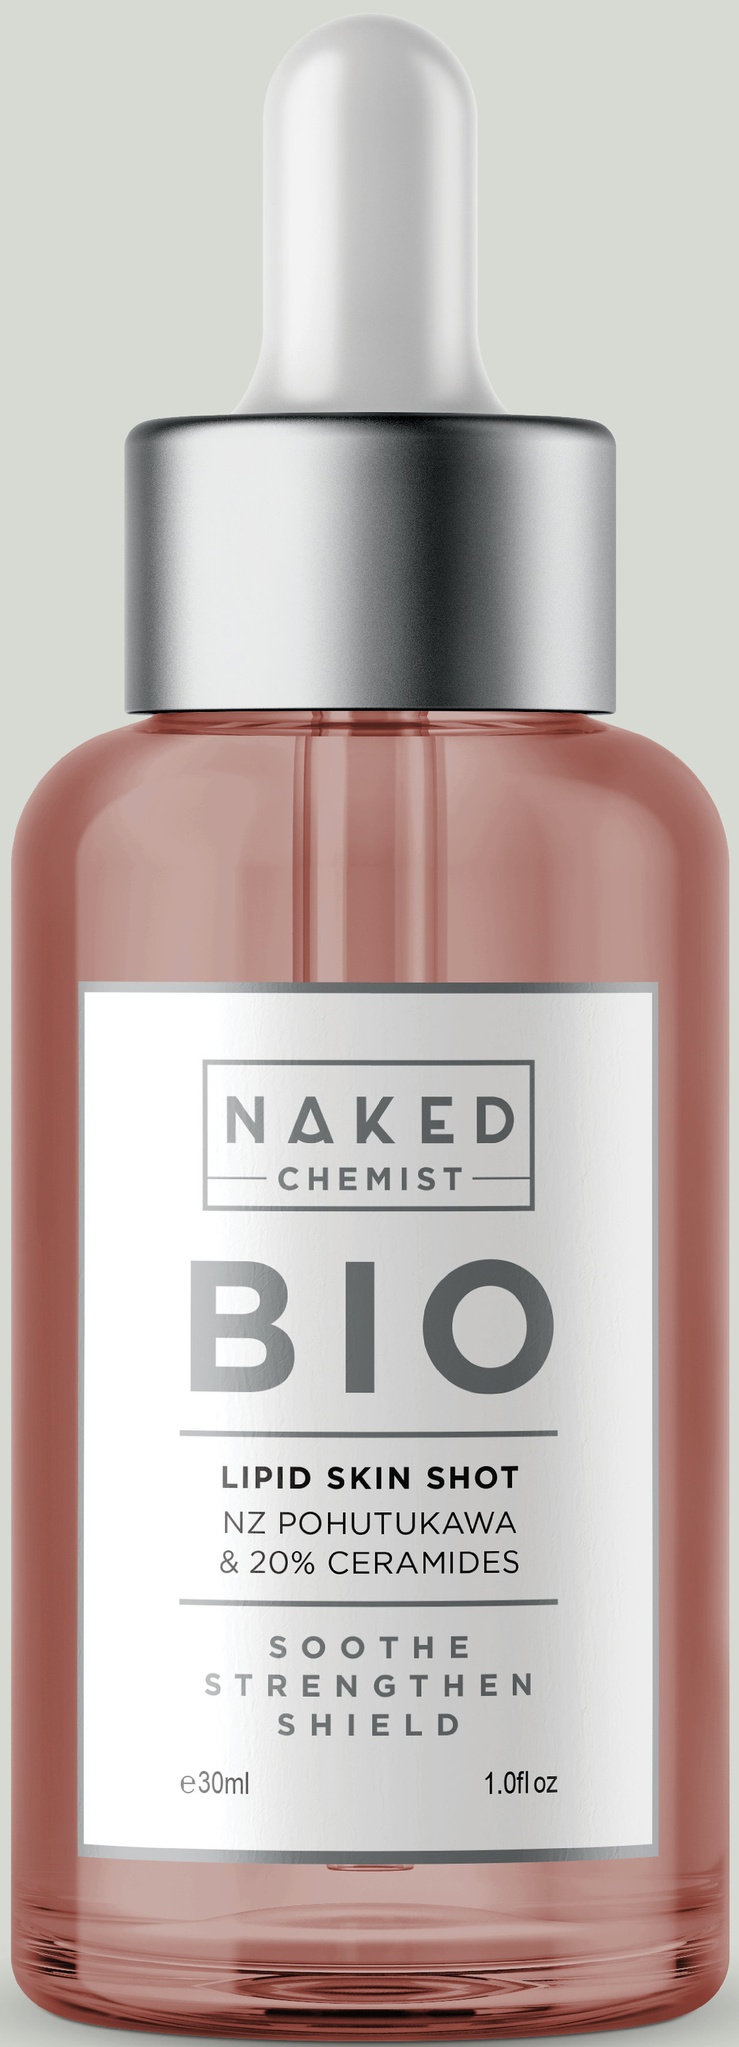 Naked Chemist Bio Lipid Complex